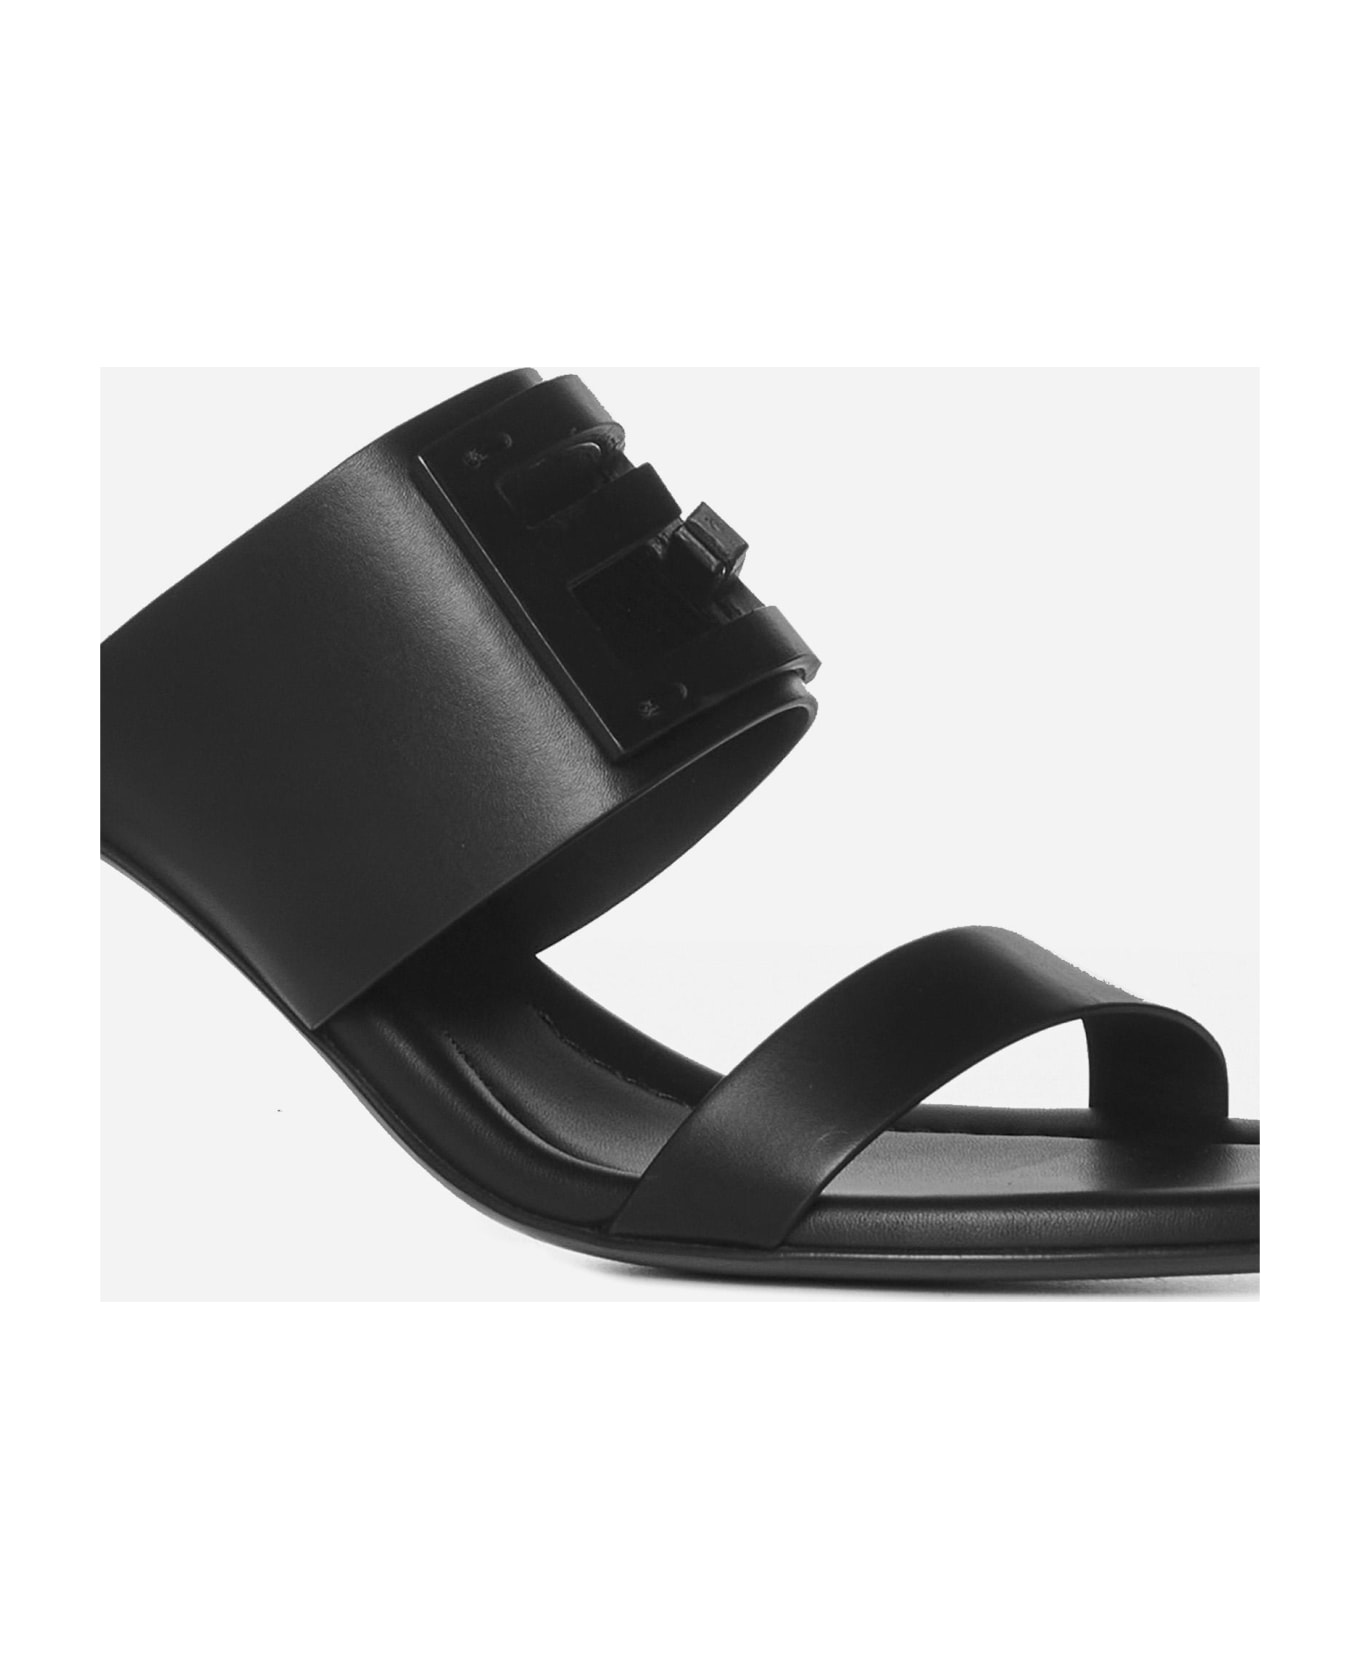 Fendi Baguette Leather Sandals - NERO